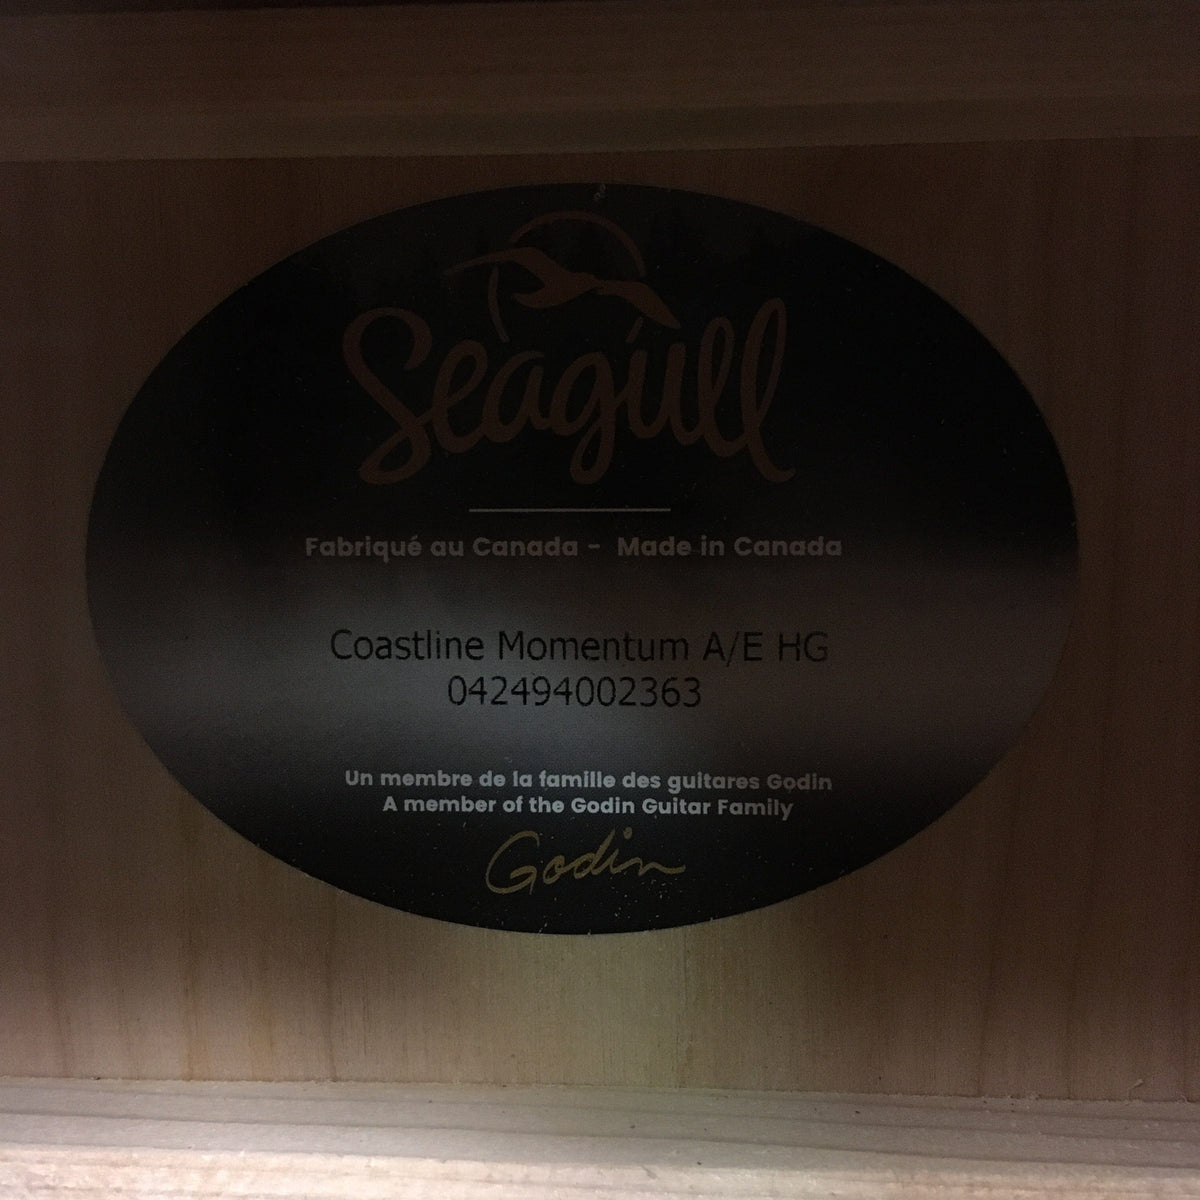 Seagull Coastline Momentum HG A/E